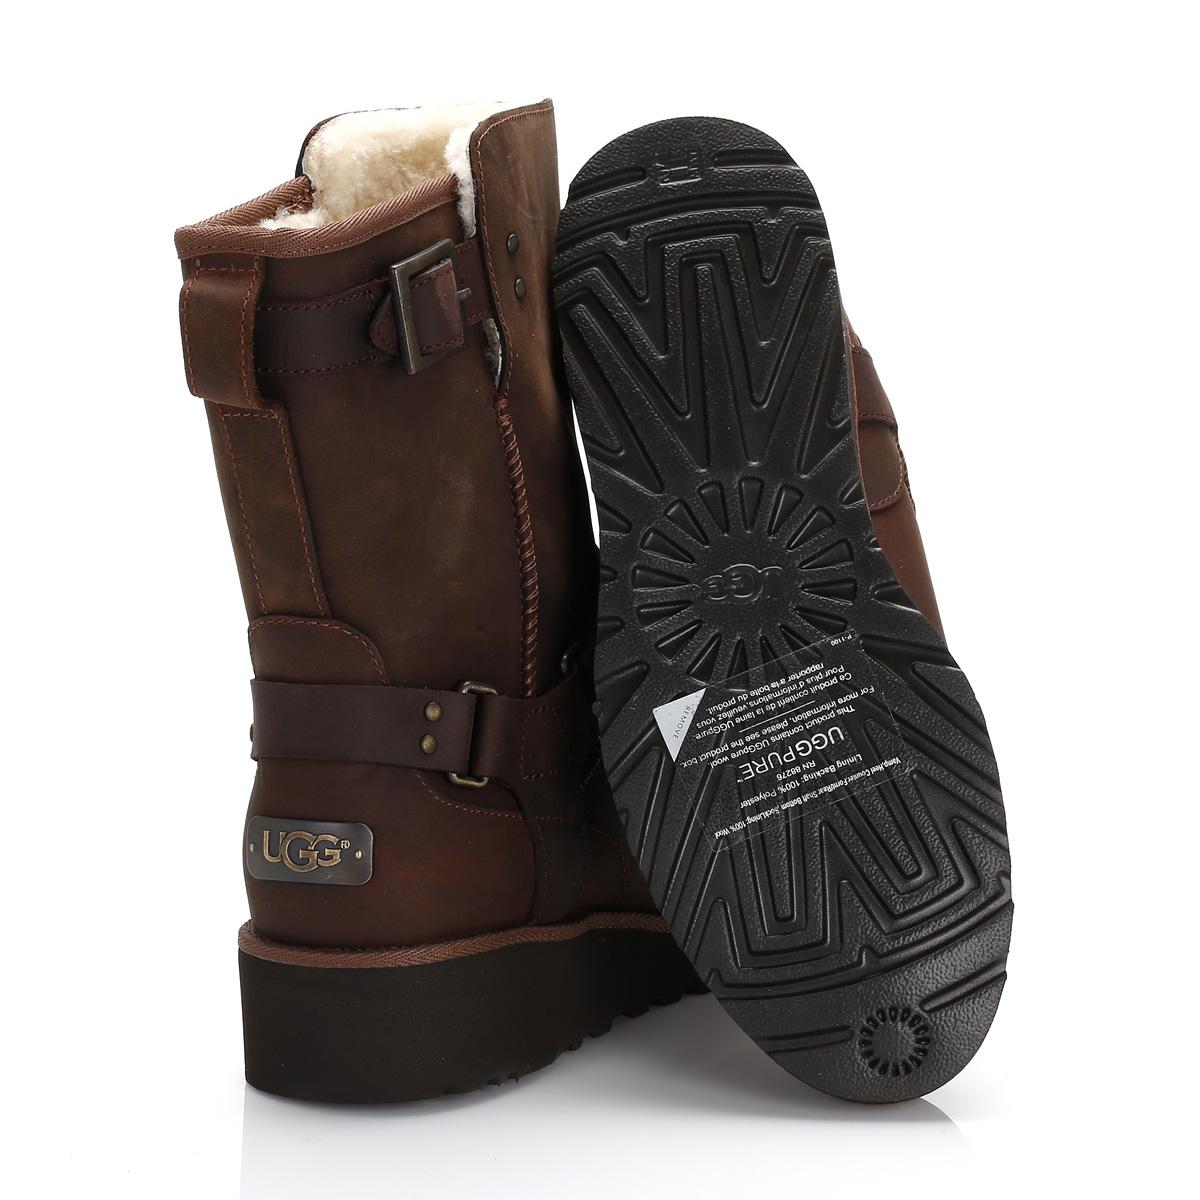 Ugg Maddox Boots Deals - www.bridgepartnersllc.com 1696152700